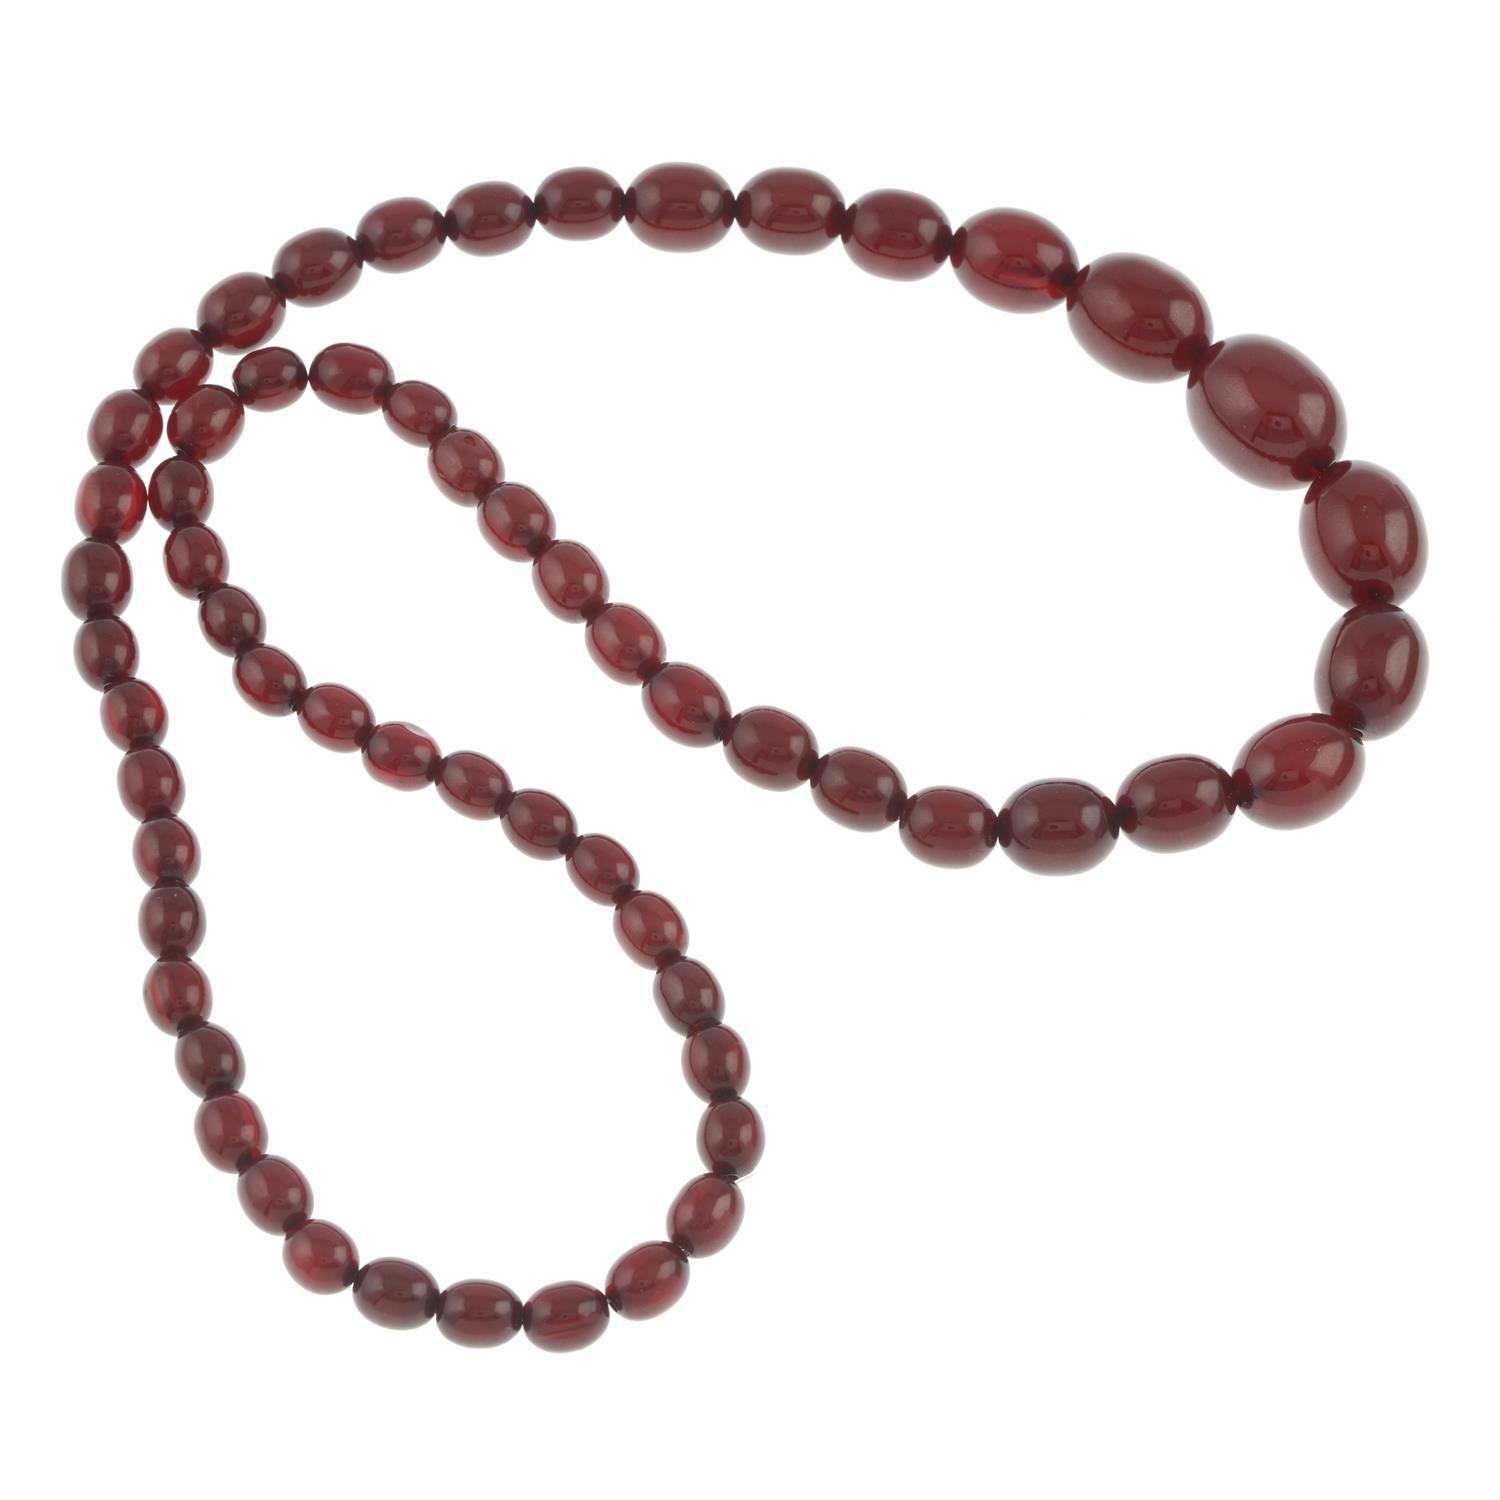 Graduated bakelite bead necklace - Image 2 of 2